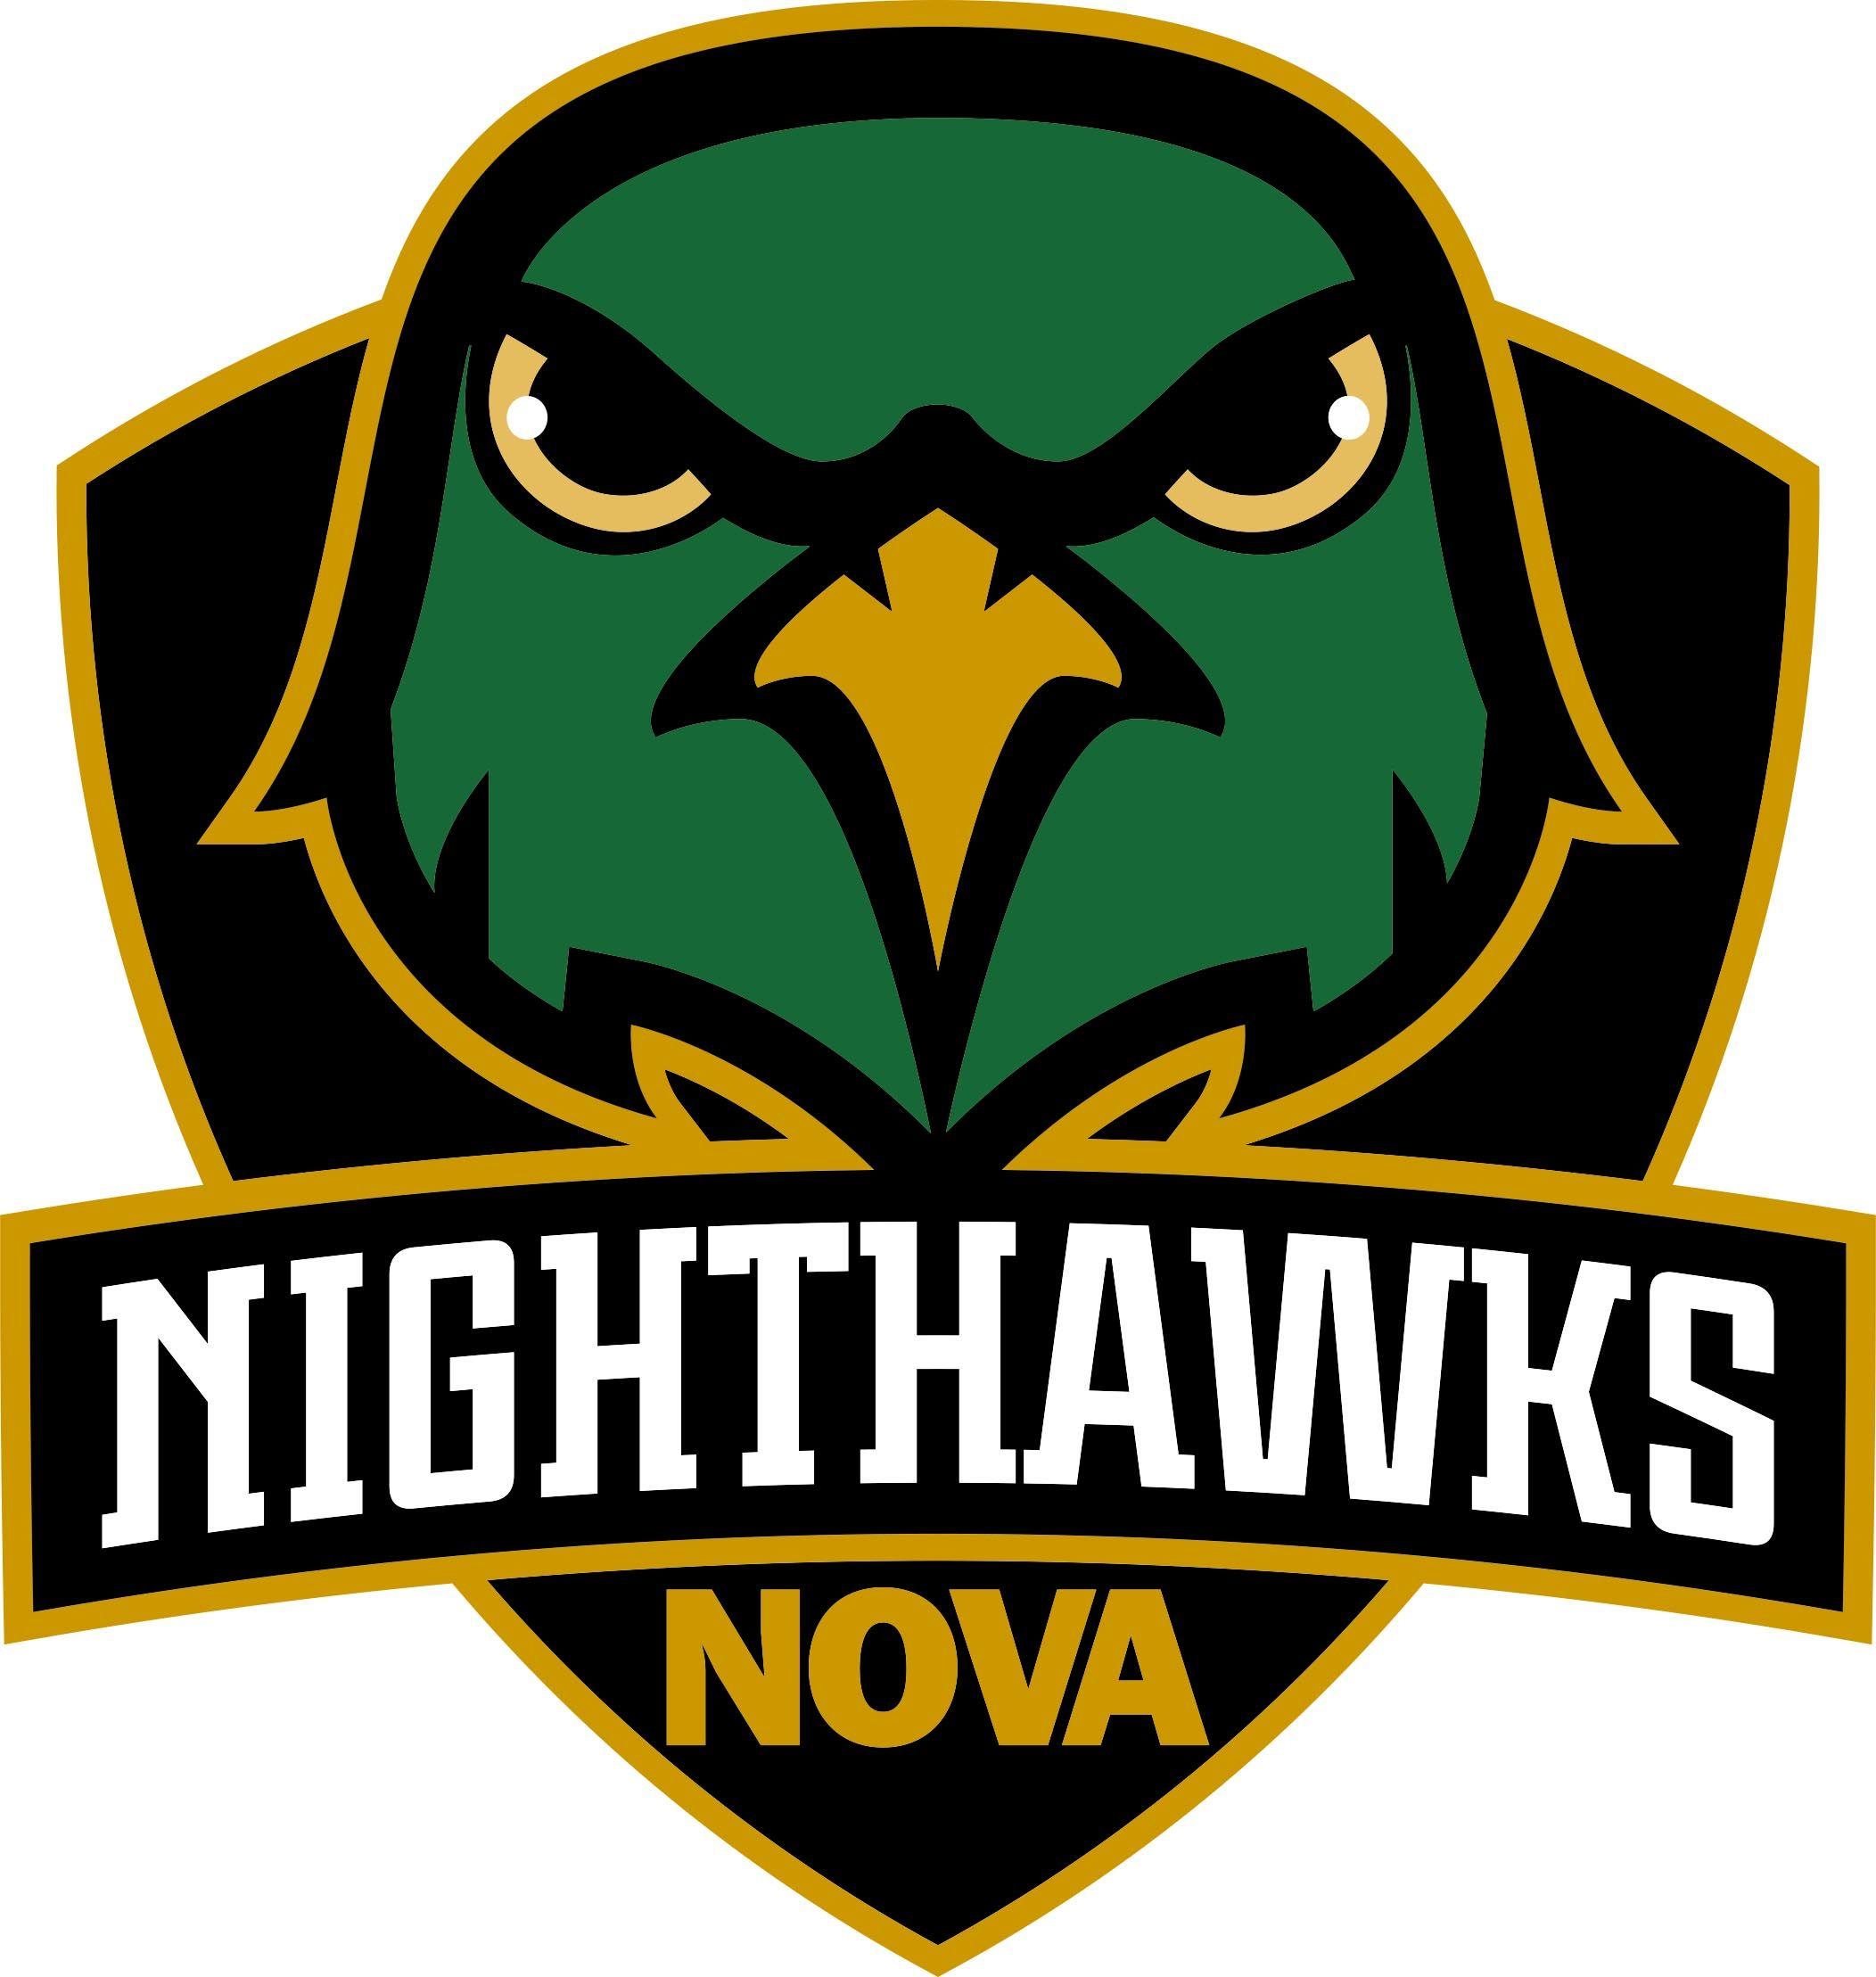 Nvcc. Nighthawk птица. Northern Virginia community College. The Nova Hawks.